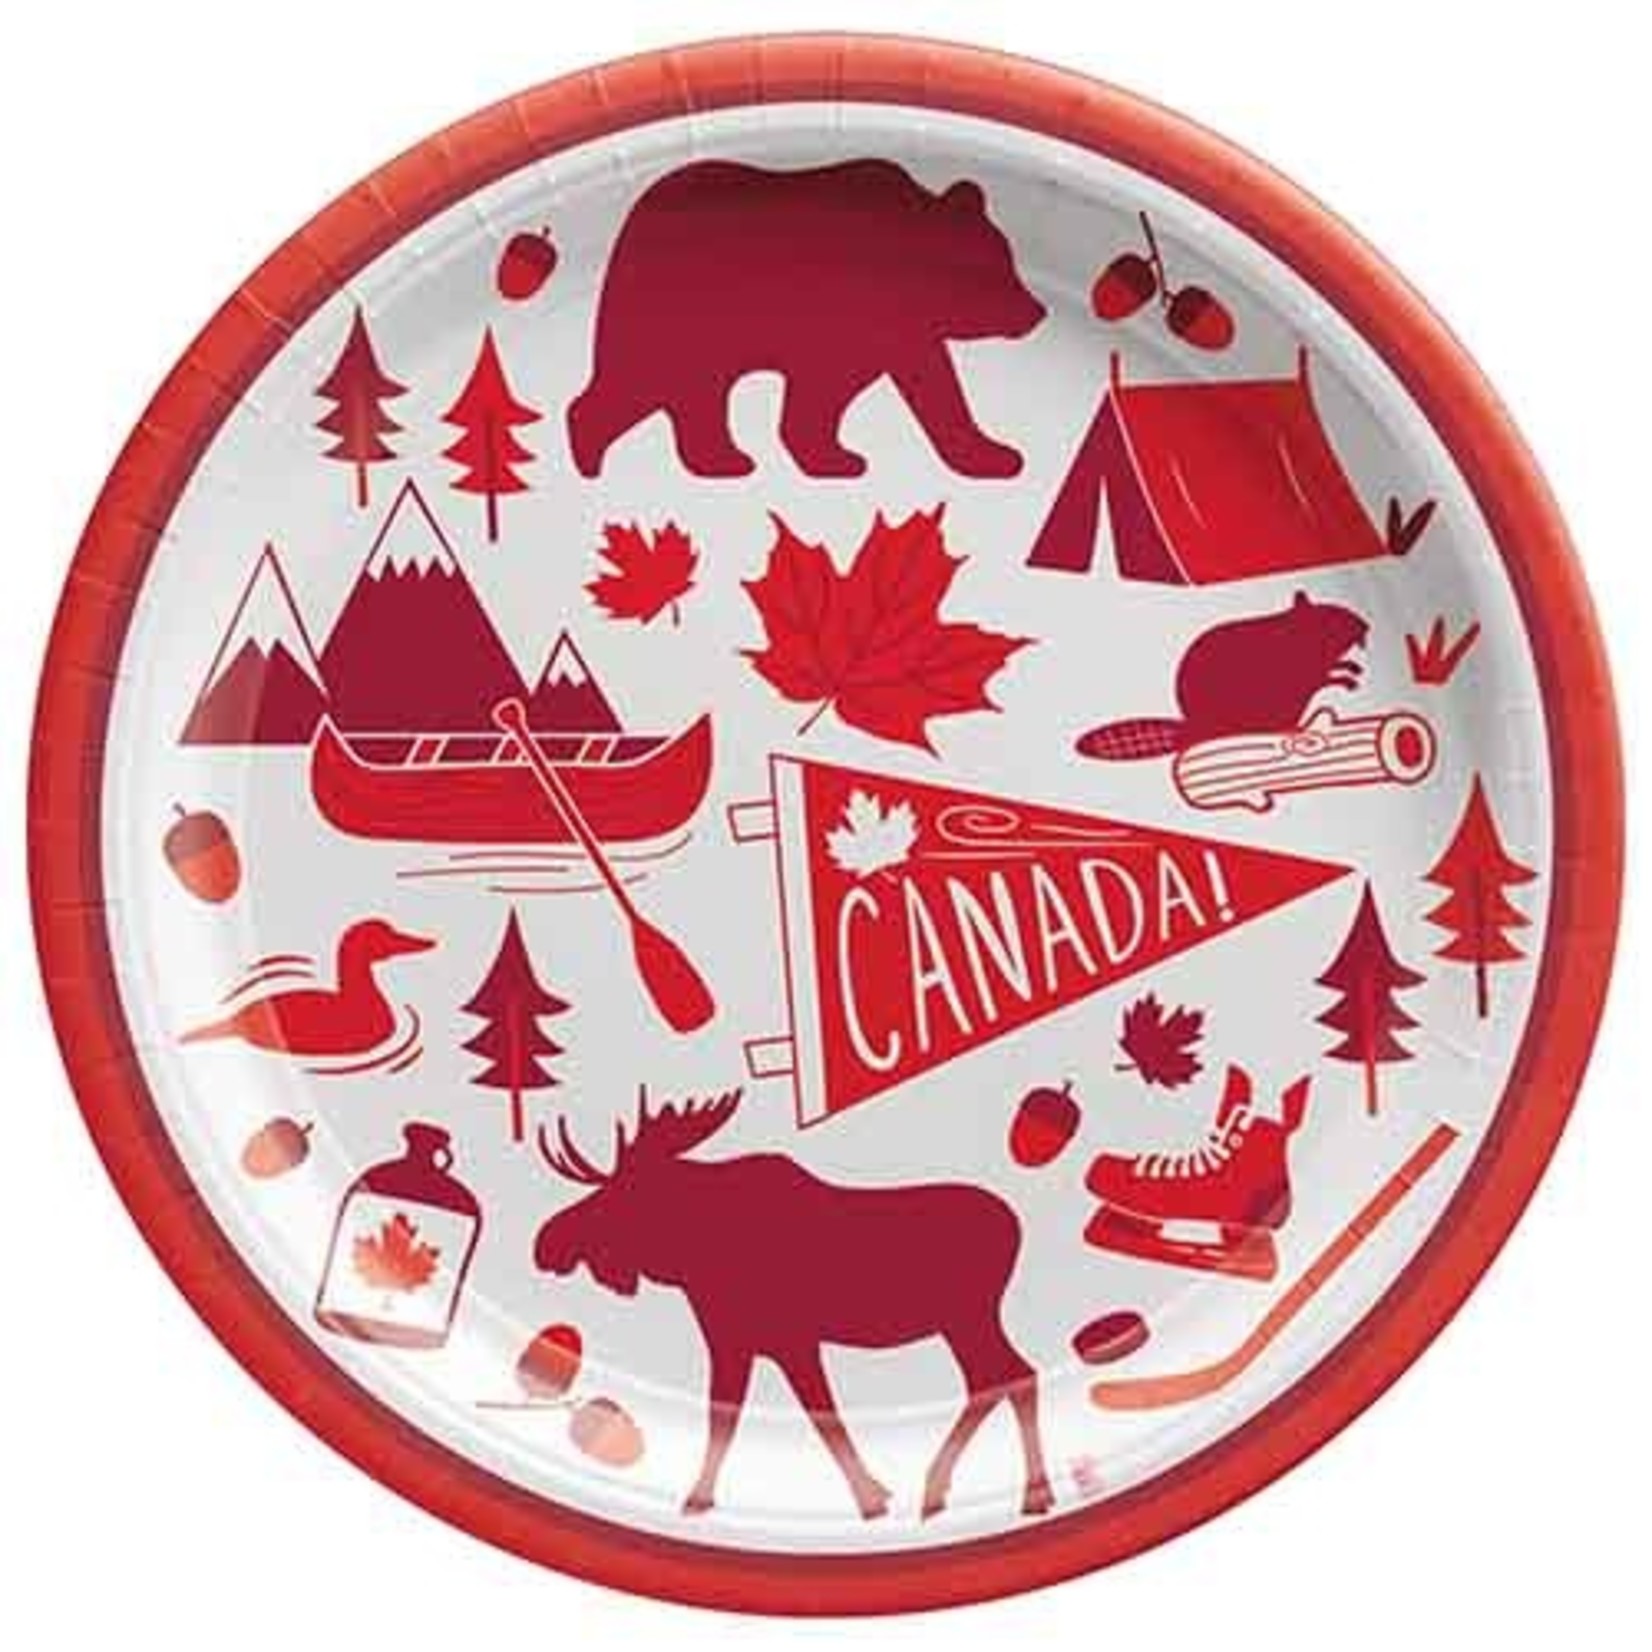 Amscan 9" Canadian Pride Plates - 10ct.